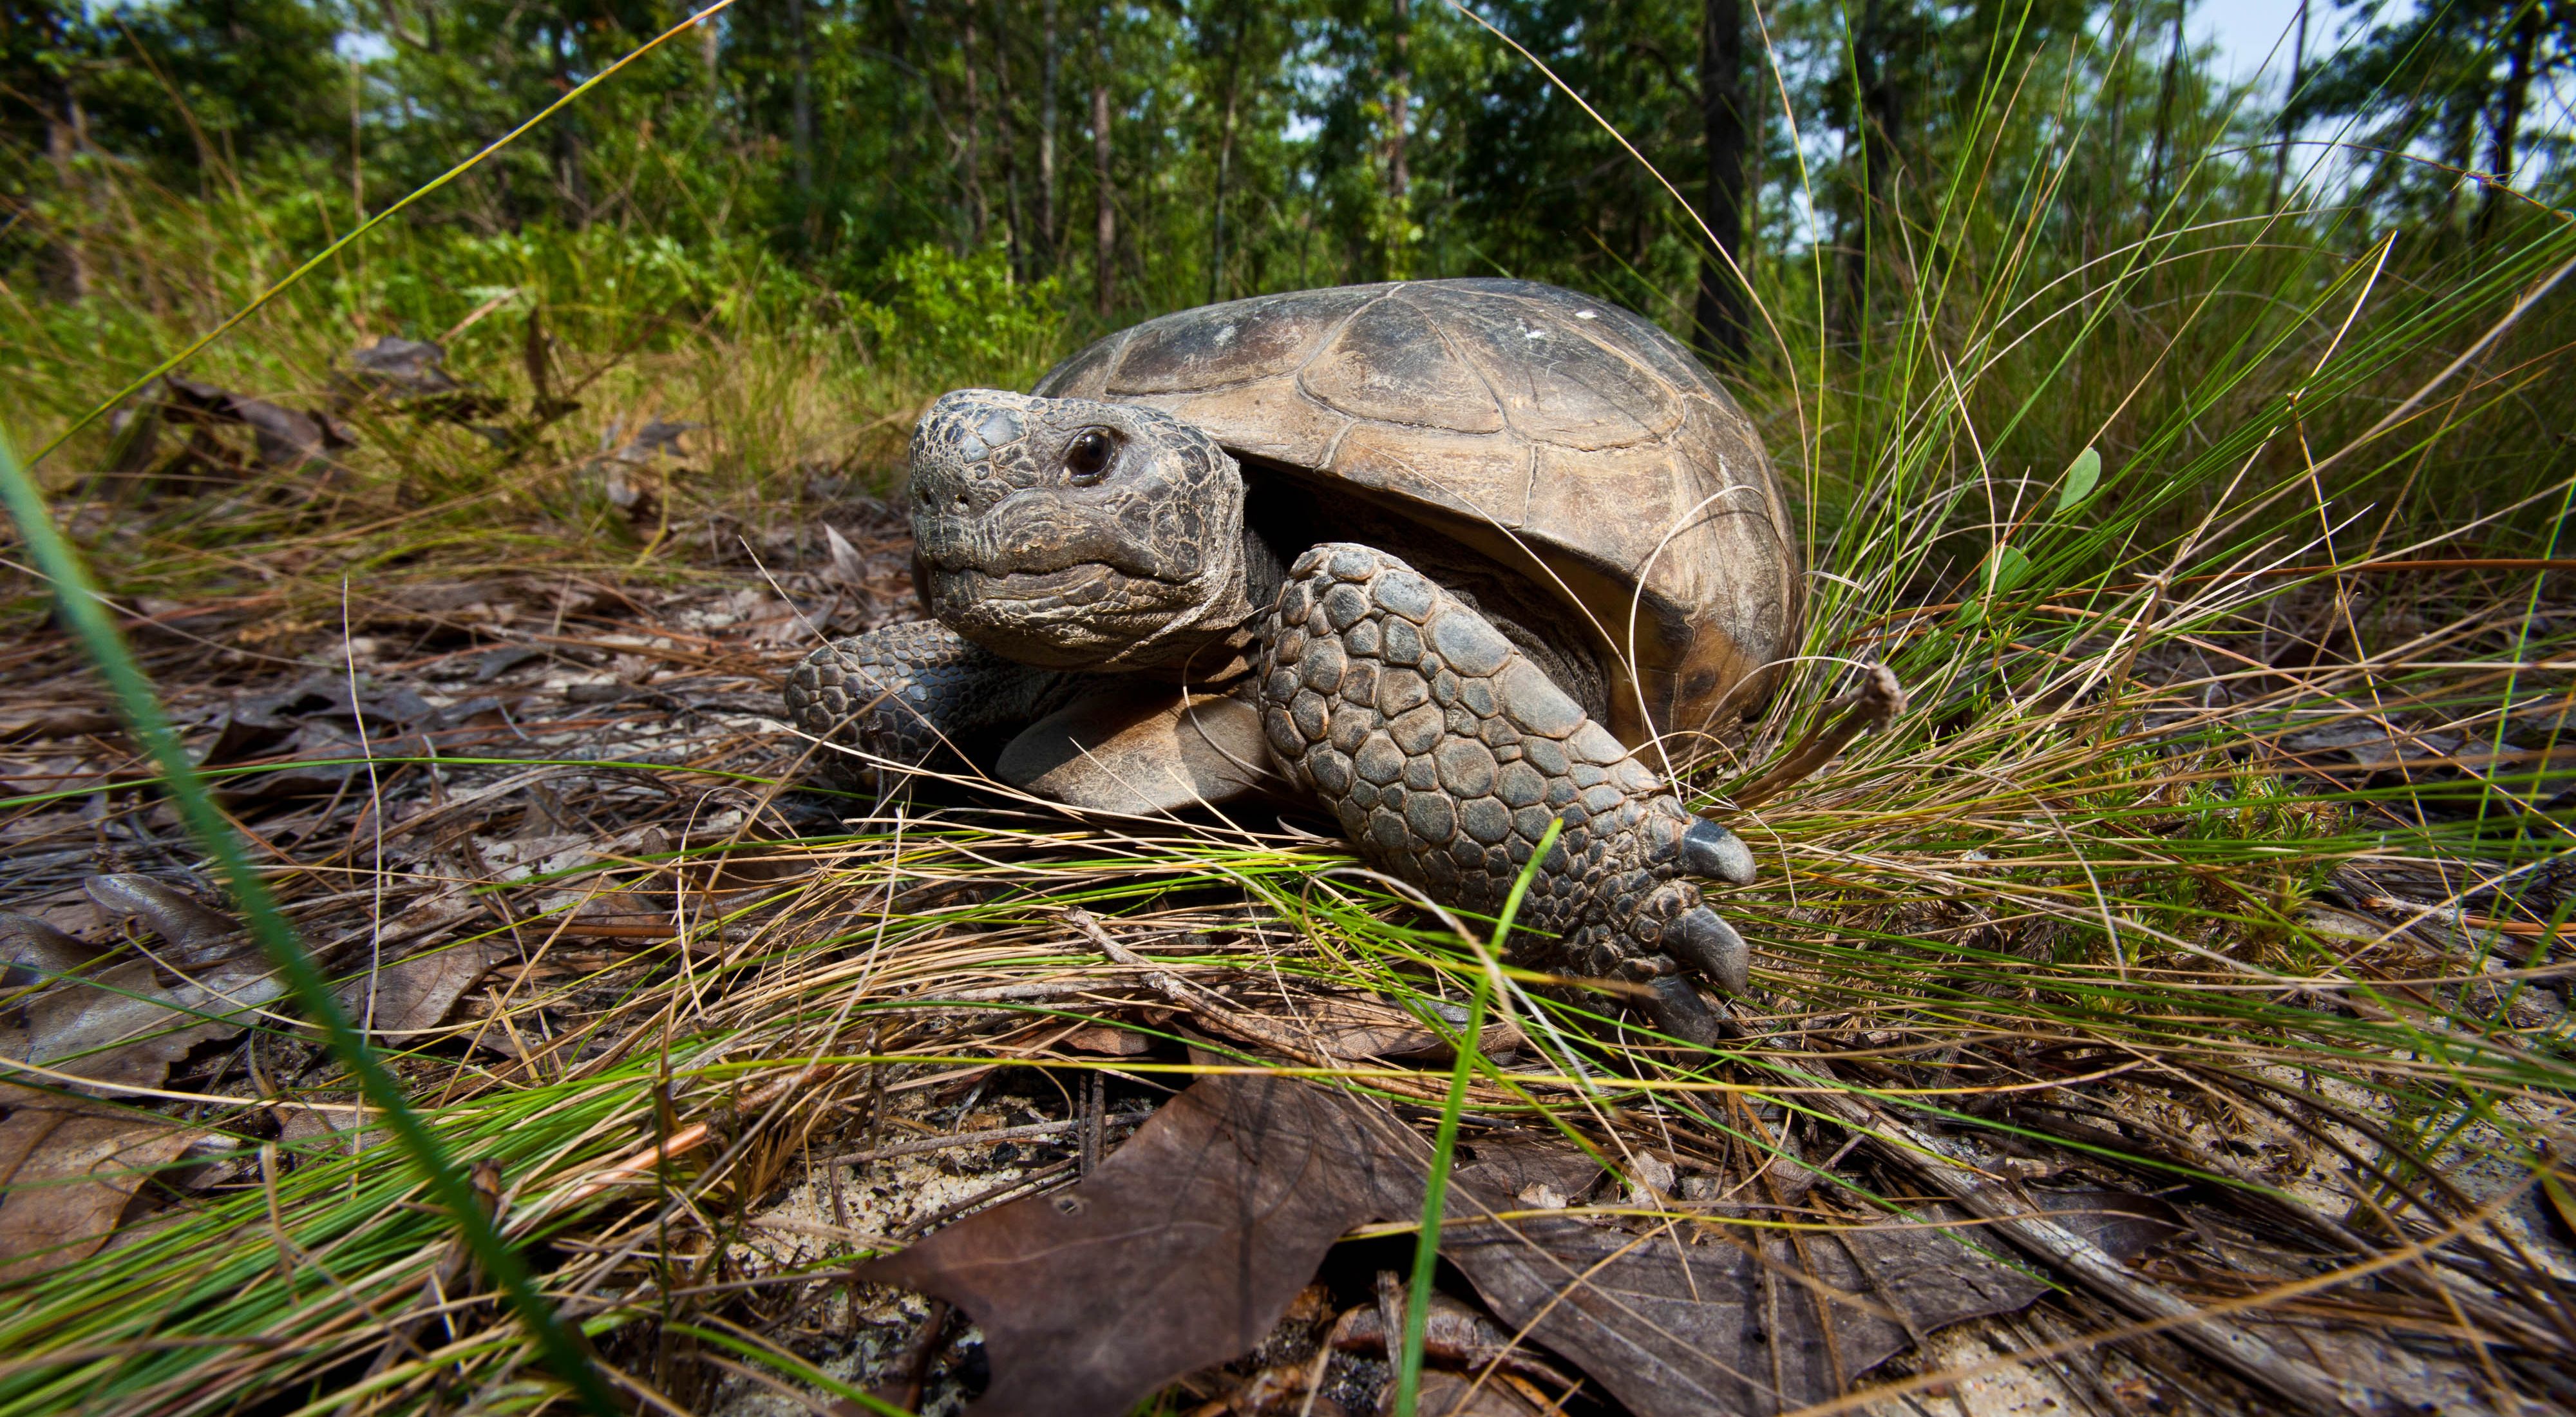 A gopher tortoise at Charles Harrold Preserve